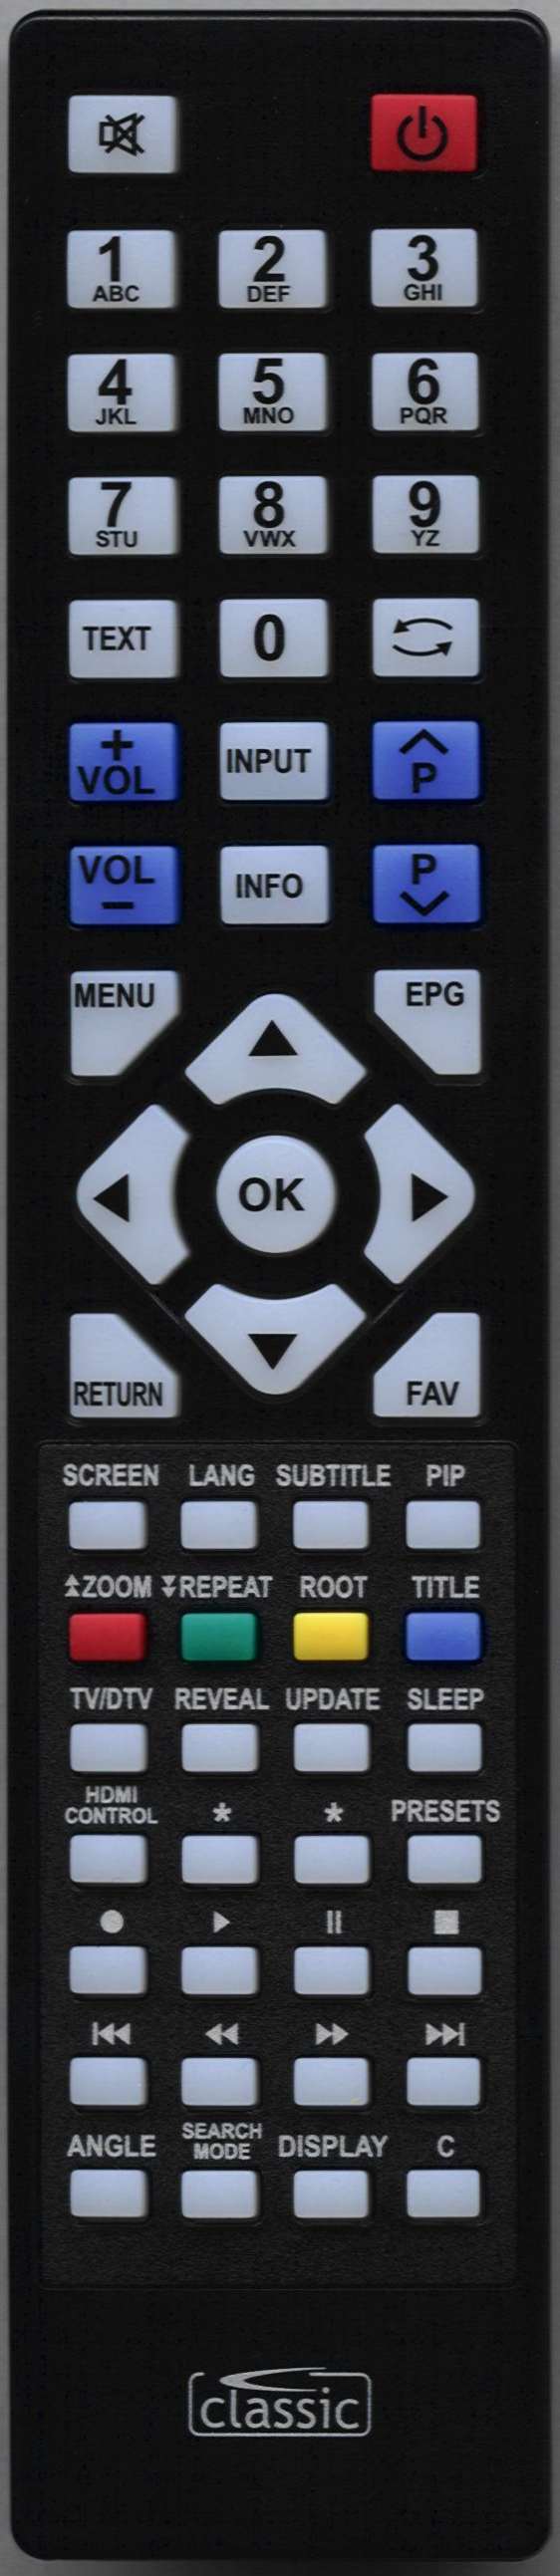 OKI V22D-PH Remote Control